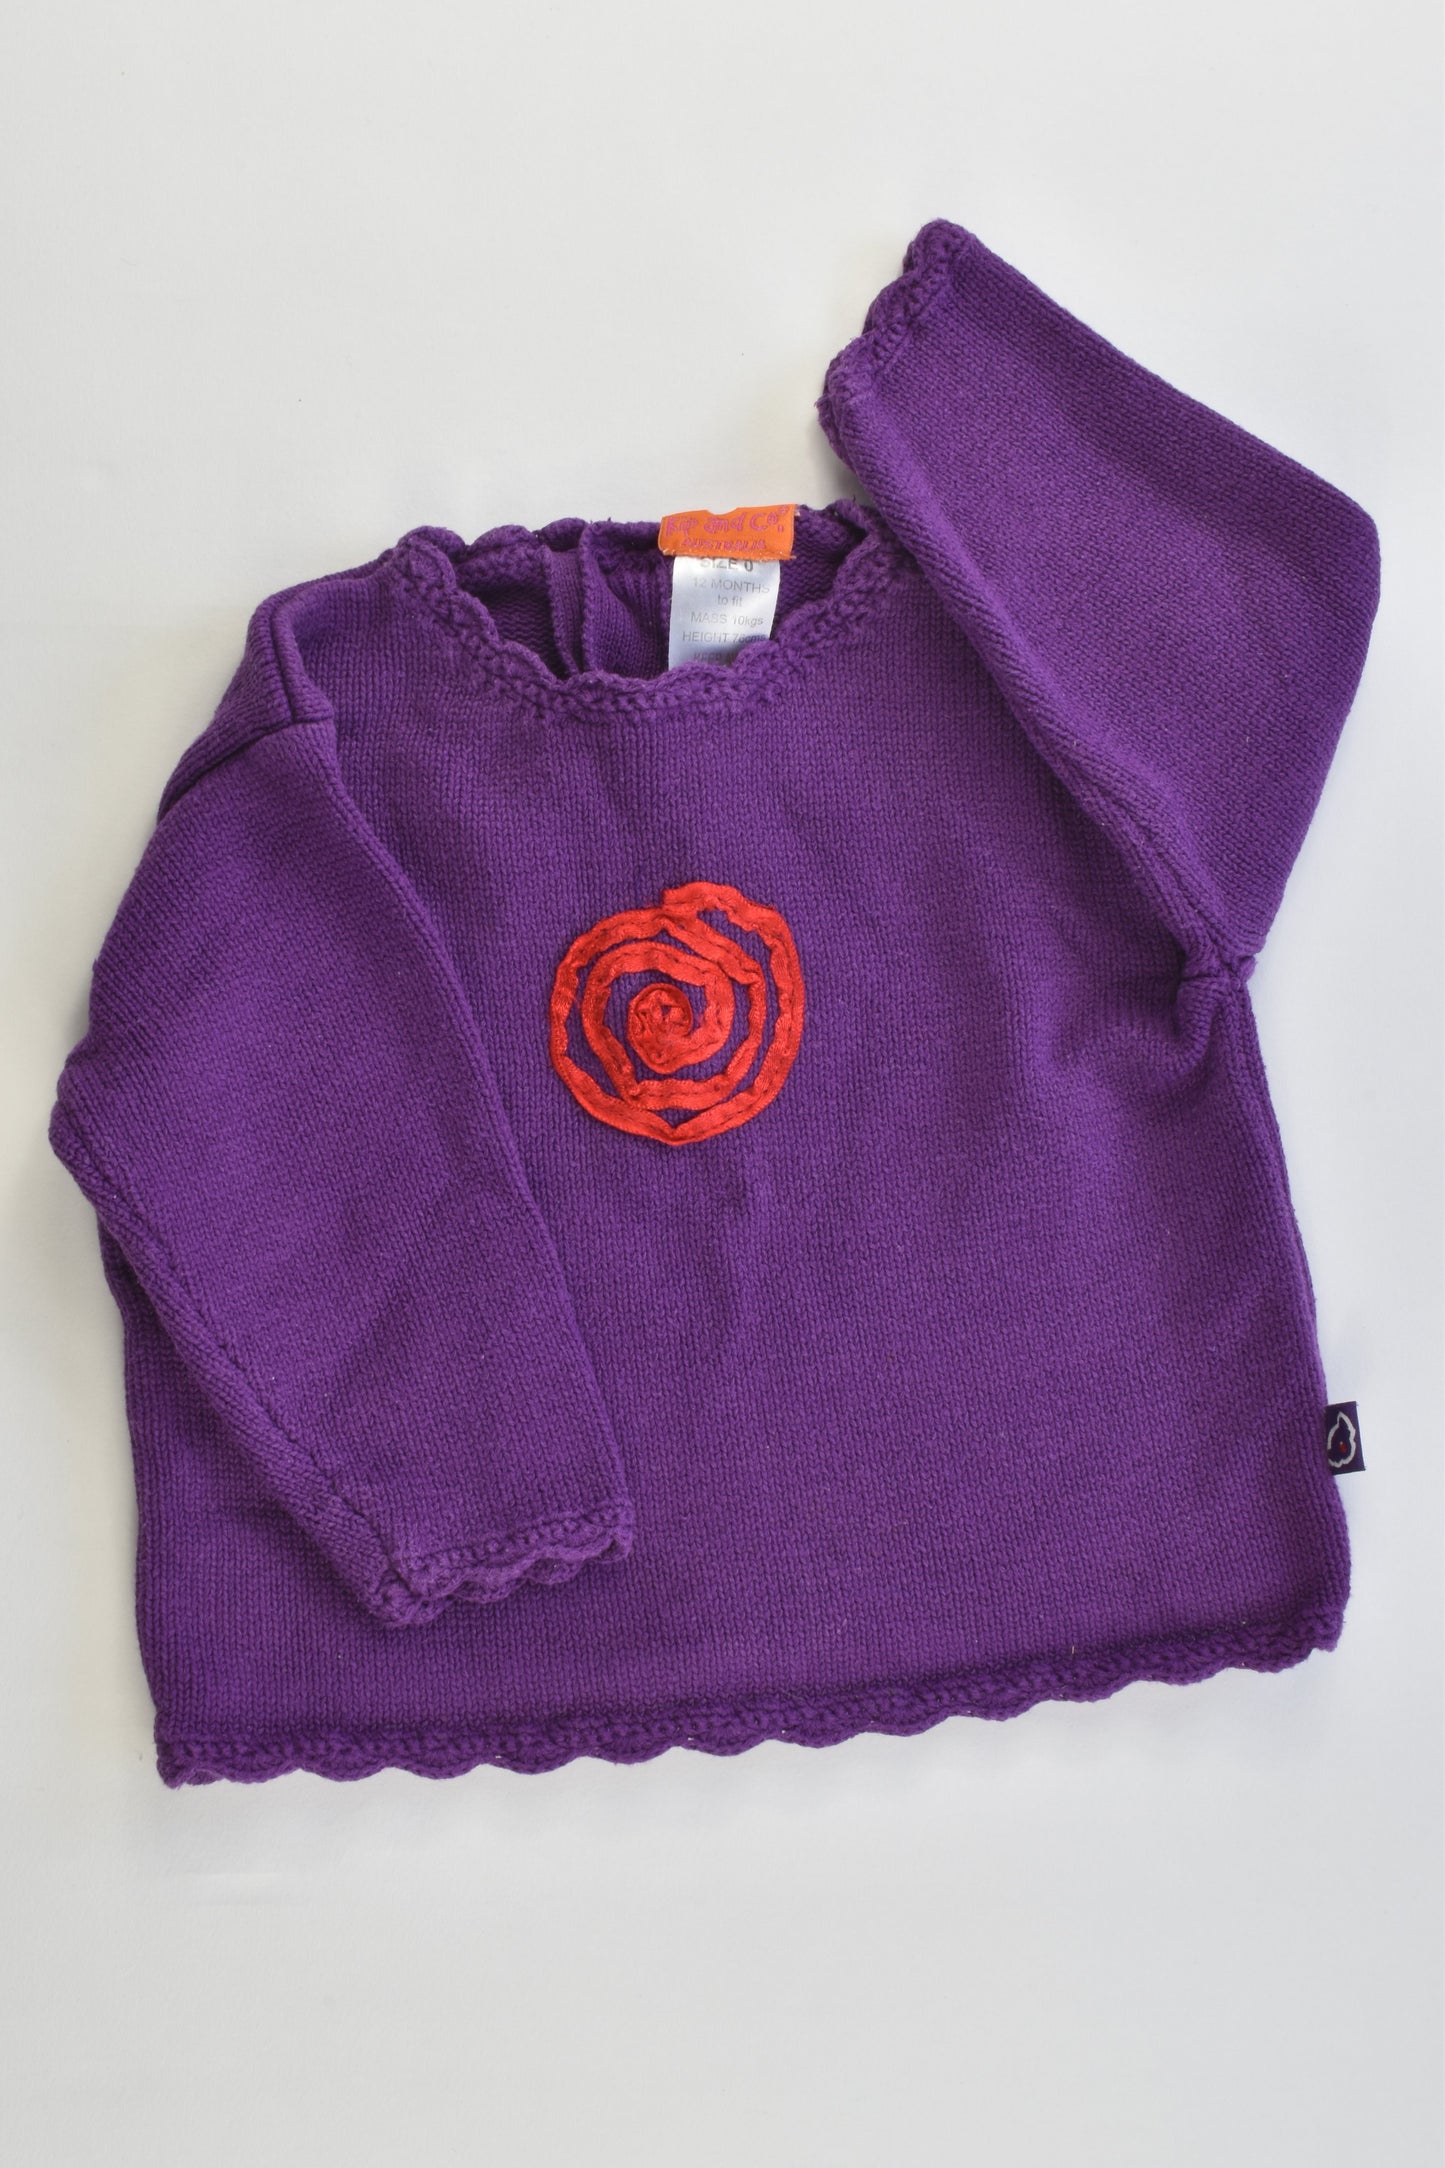 Kip & Co (Australia) Size 0 (12 months, 76 cm) Knitted Jumper